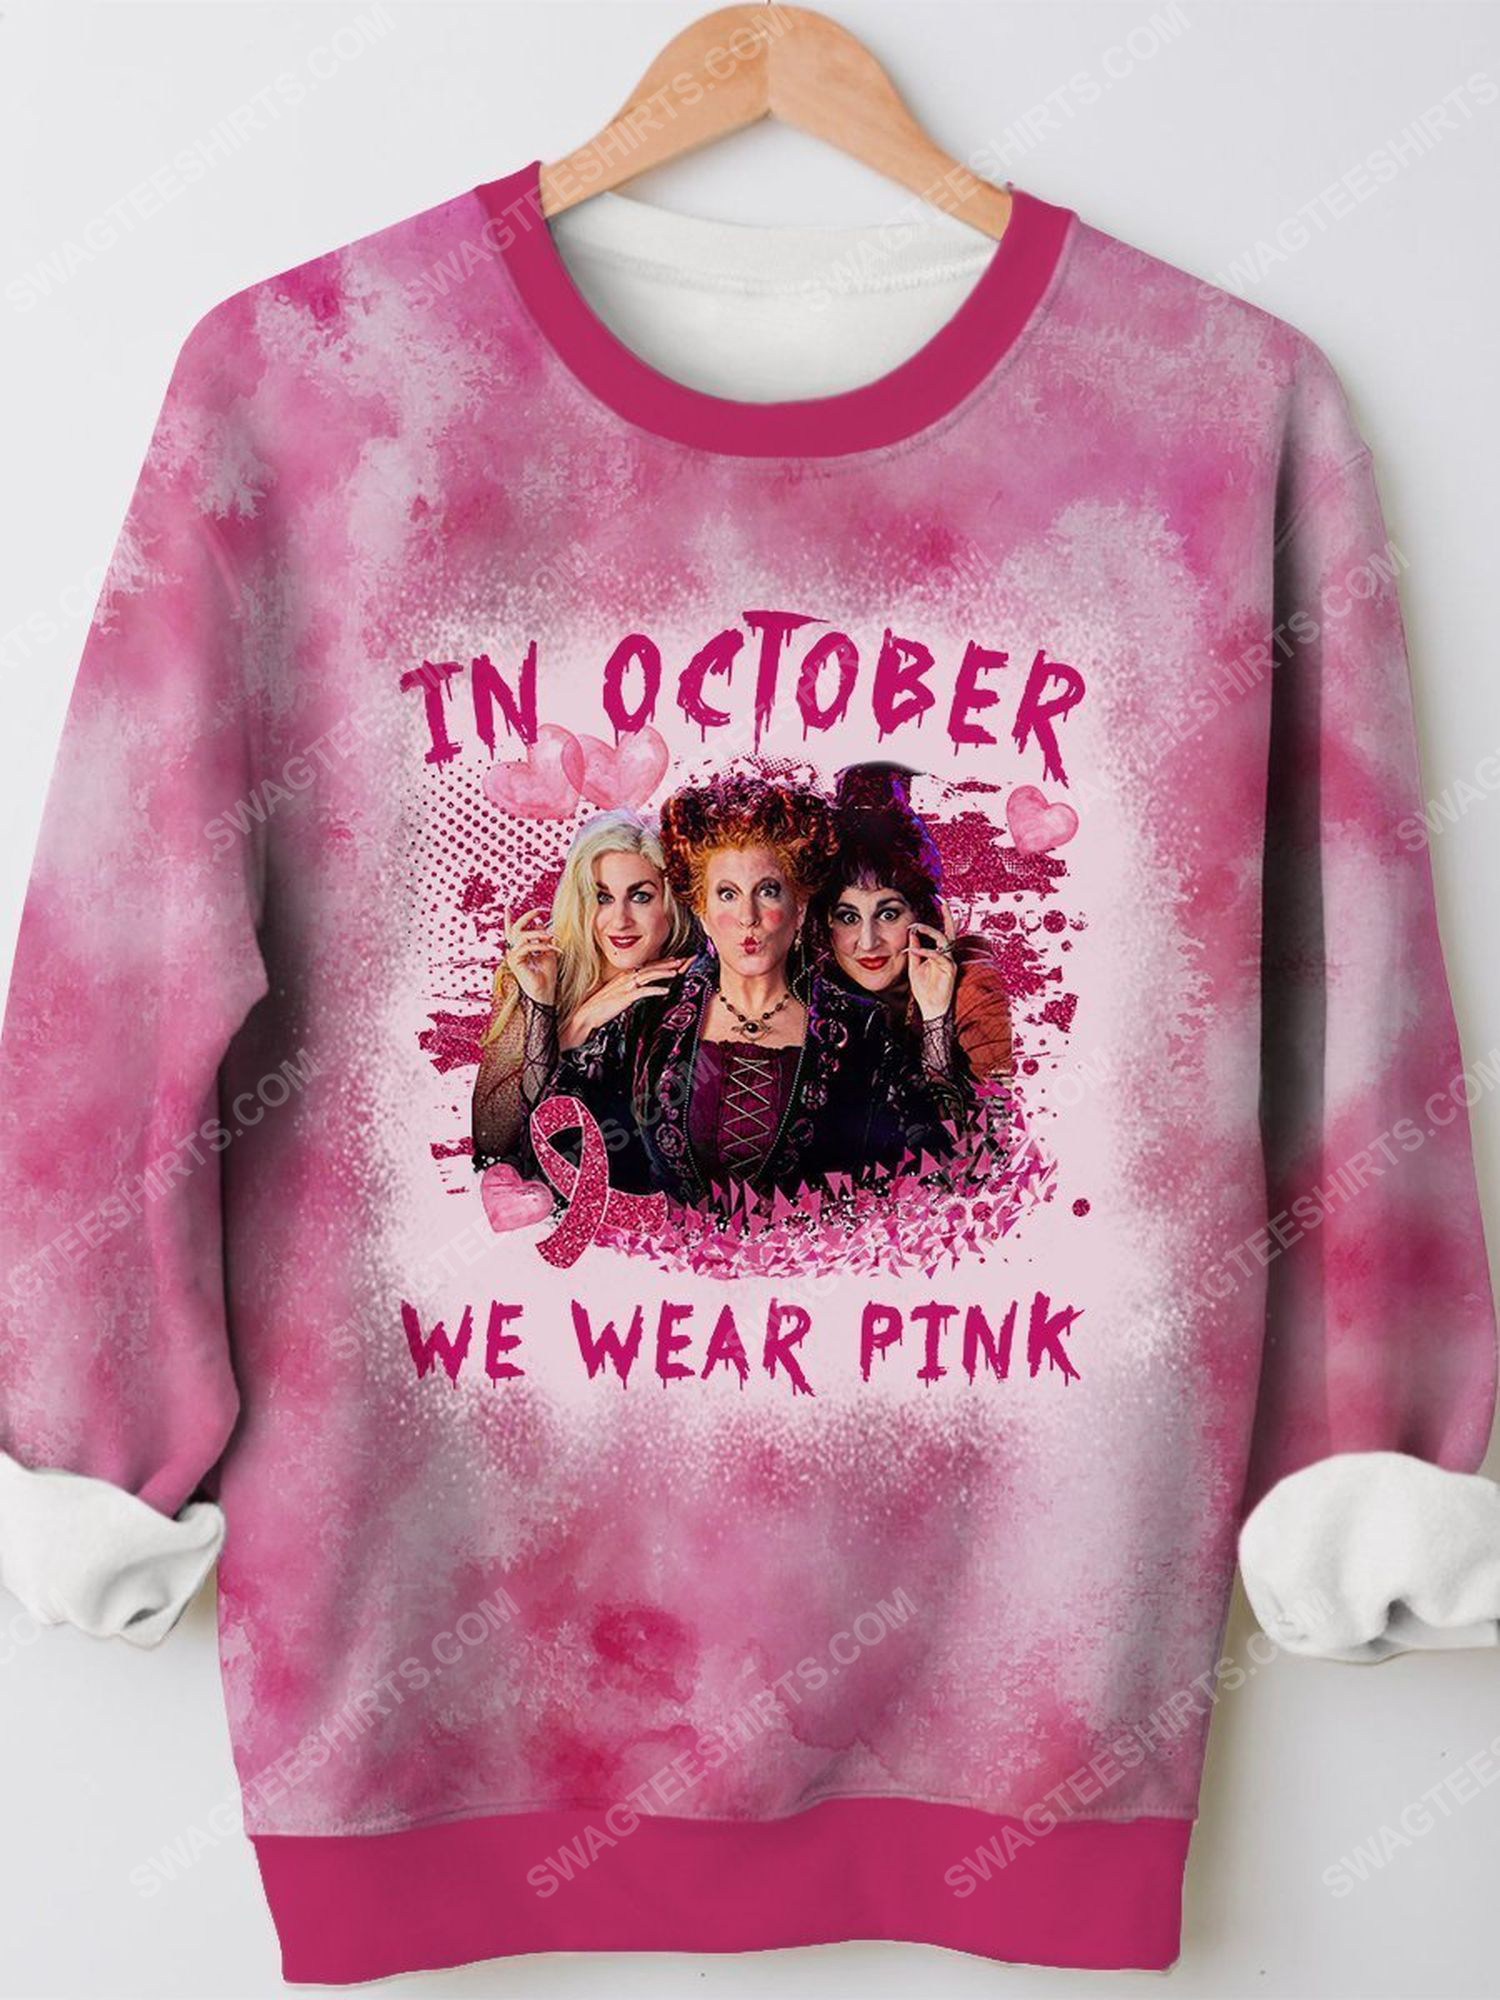 Breast cancer awareness in october we wear pink hocus pocus tie dye shirt 1 - Copy (2)